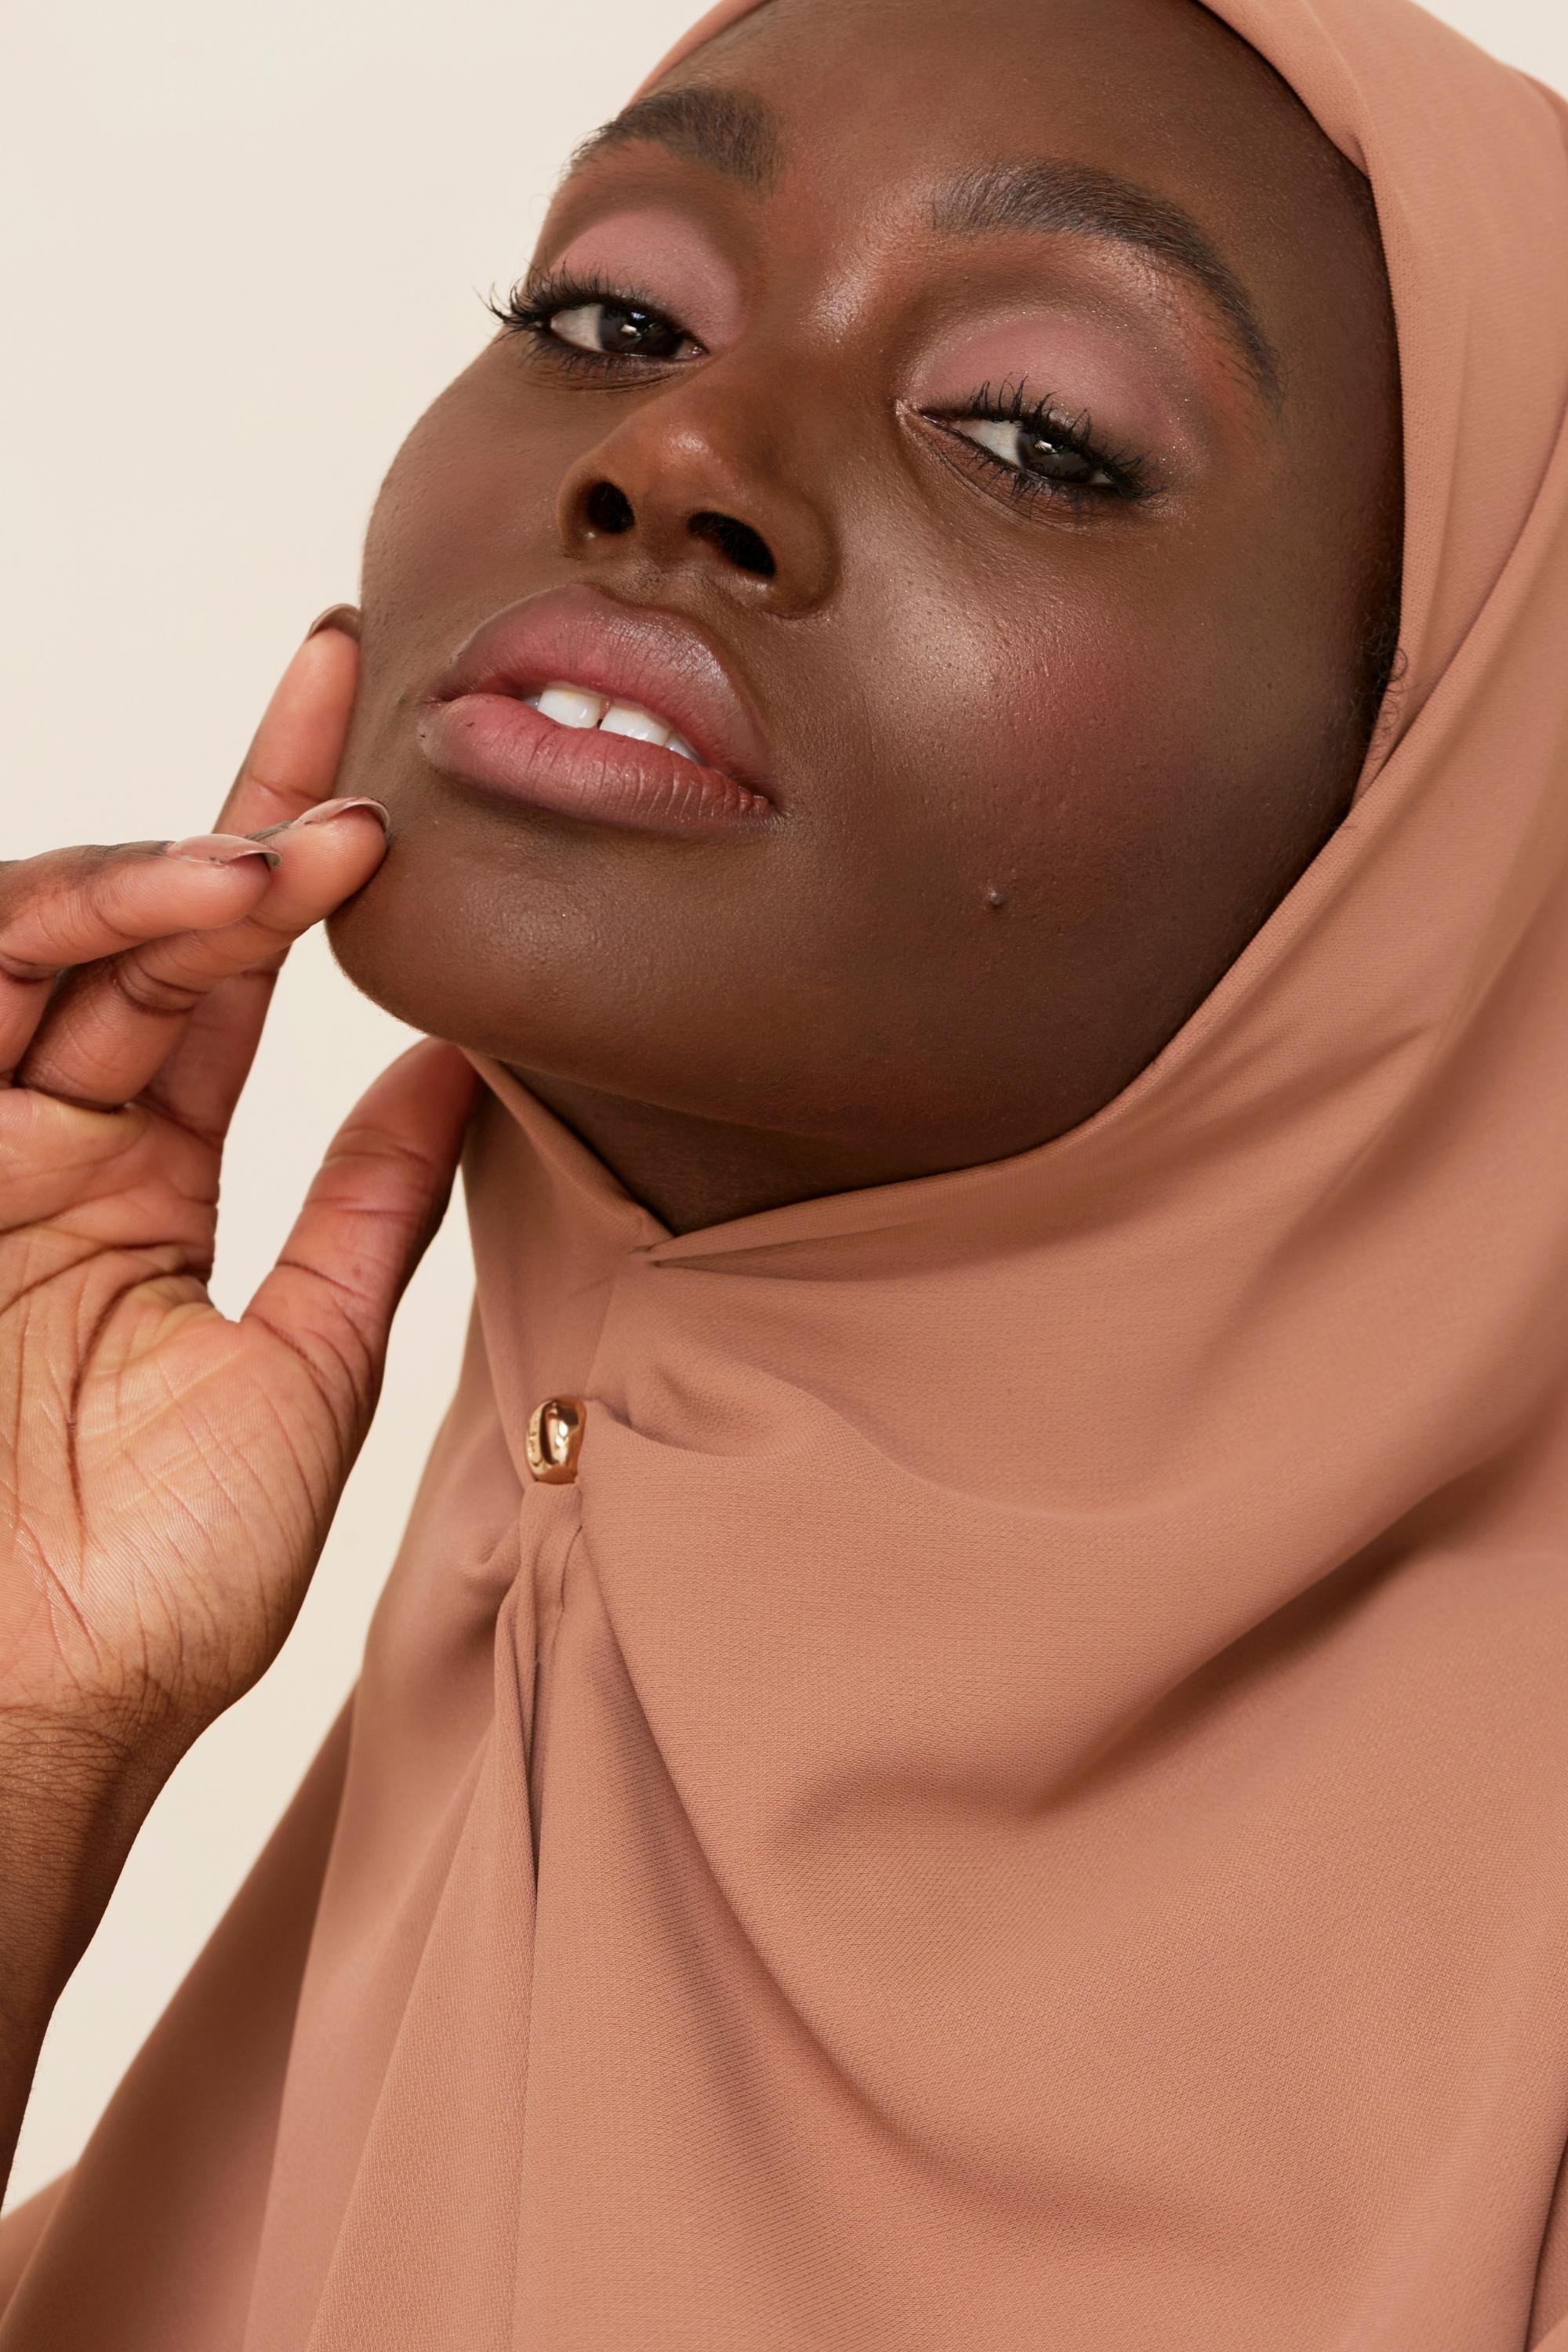 Premium Chiffon Hijab - Tulum Veiled Collection 